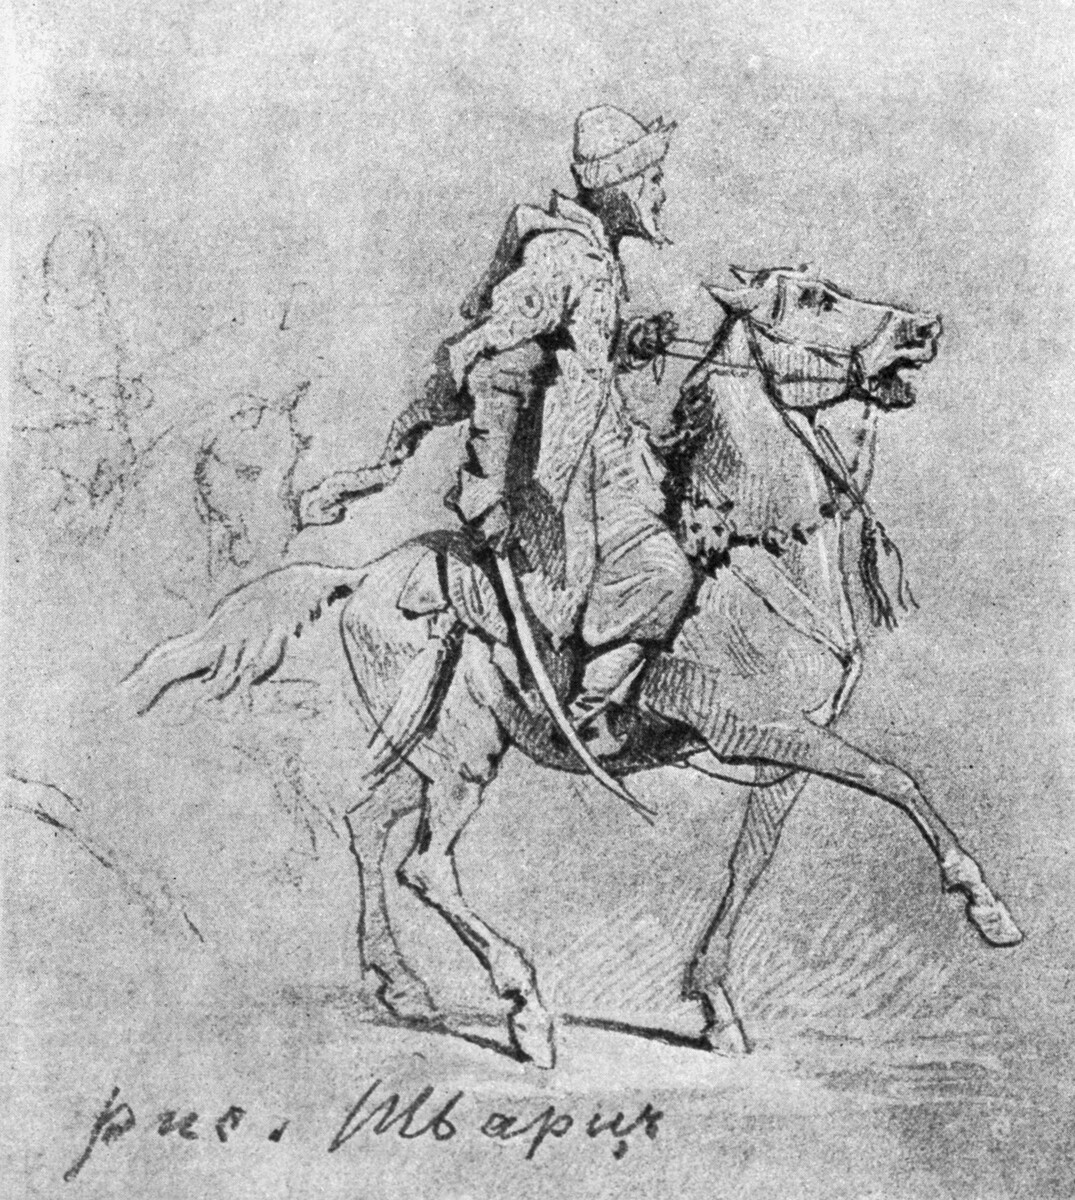 “Oprichnik”, disegno del pittore russo Vjacheslav Shvarts (1838-1869)